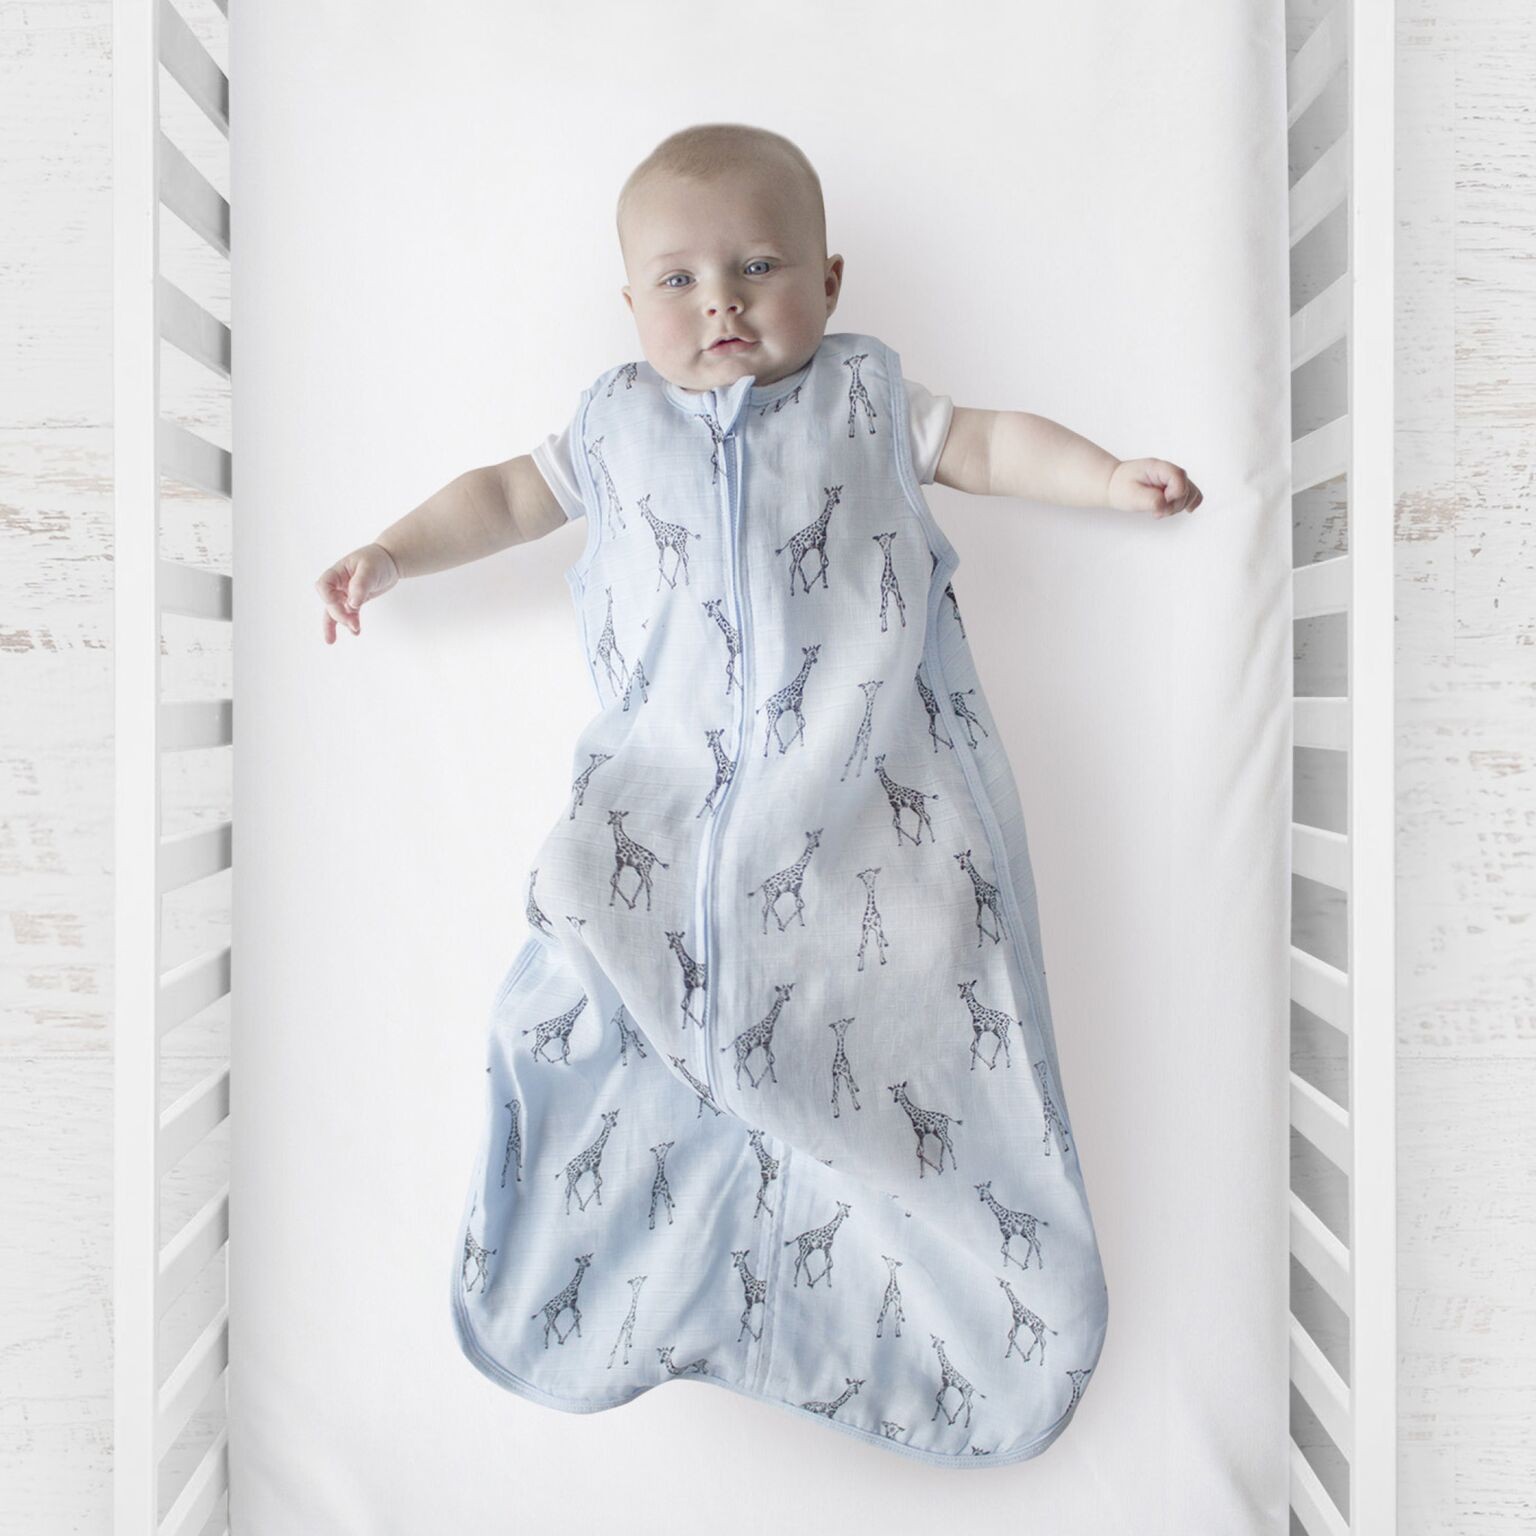 Nabance Cotton Baby Sleeping Bag Baby Sleeping Sack 0.5 Tog Nursery Wearable Blanket Swaddle for Infant Toddler Unisex 18-36 Months